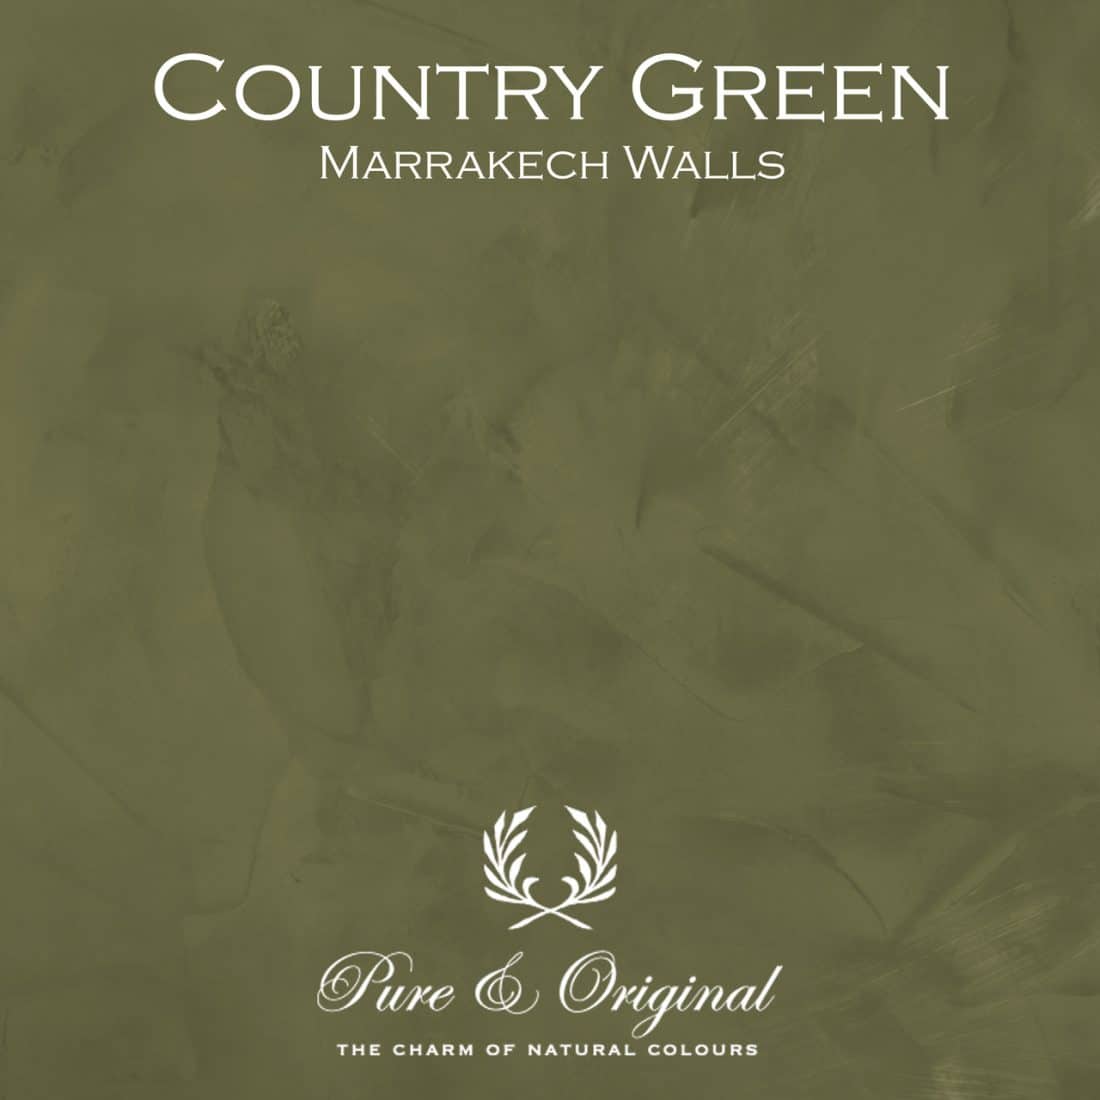 Country Green Marrakech Walls Pure Original